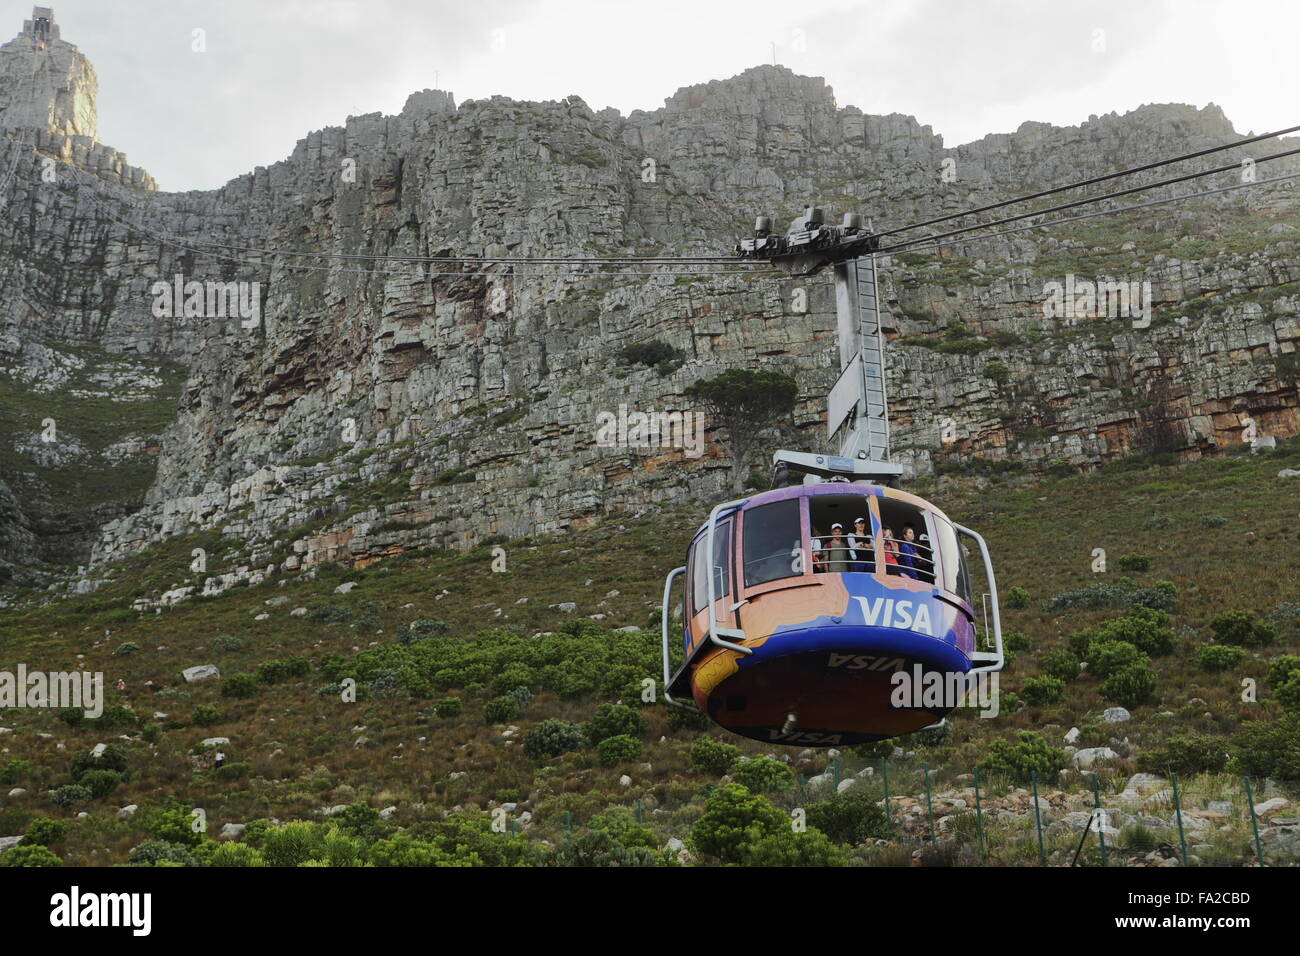 El teleférico de Table Mountain ascendente Foto de stock